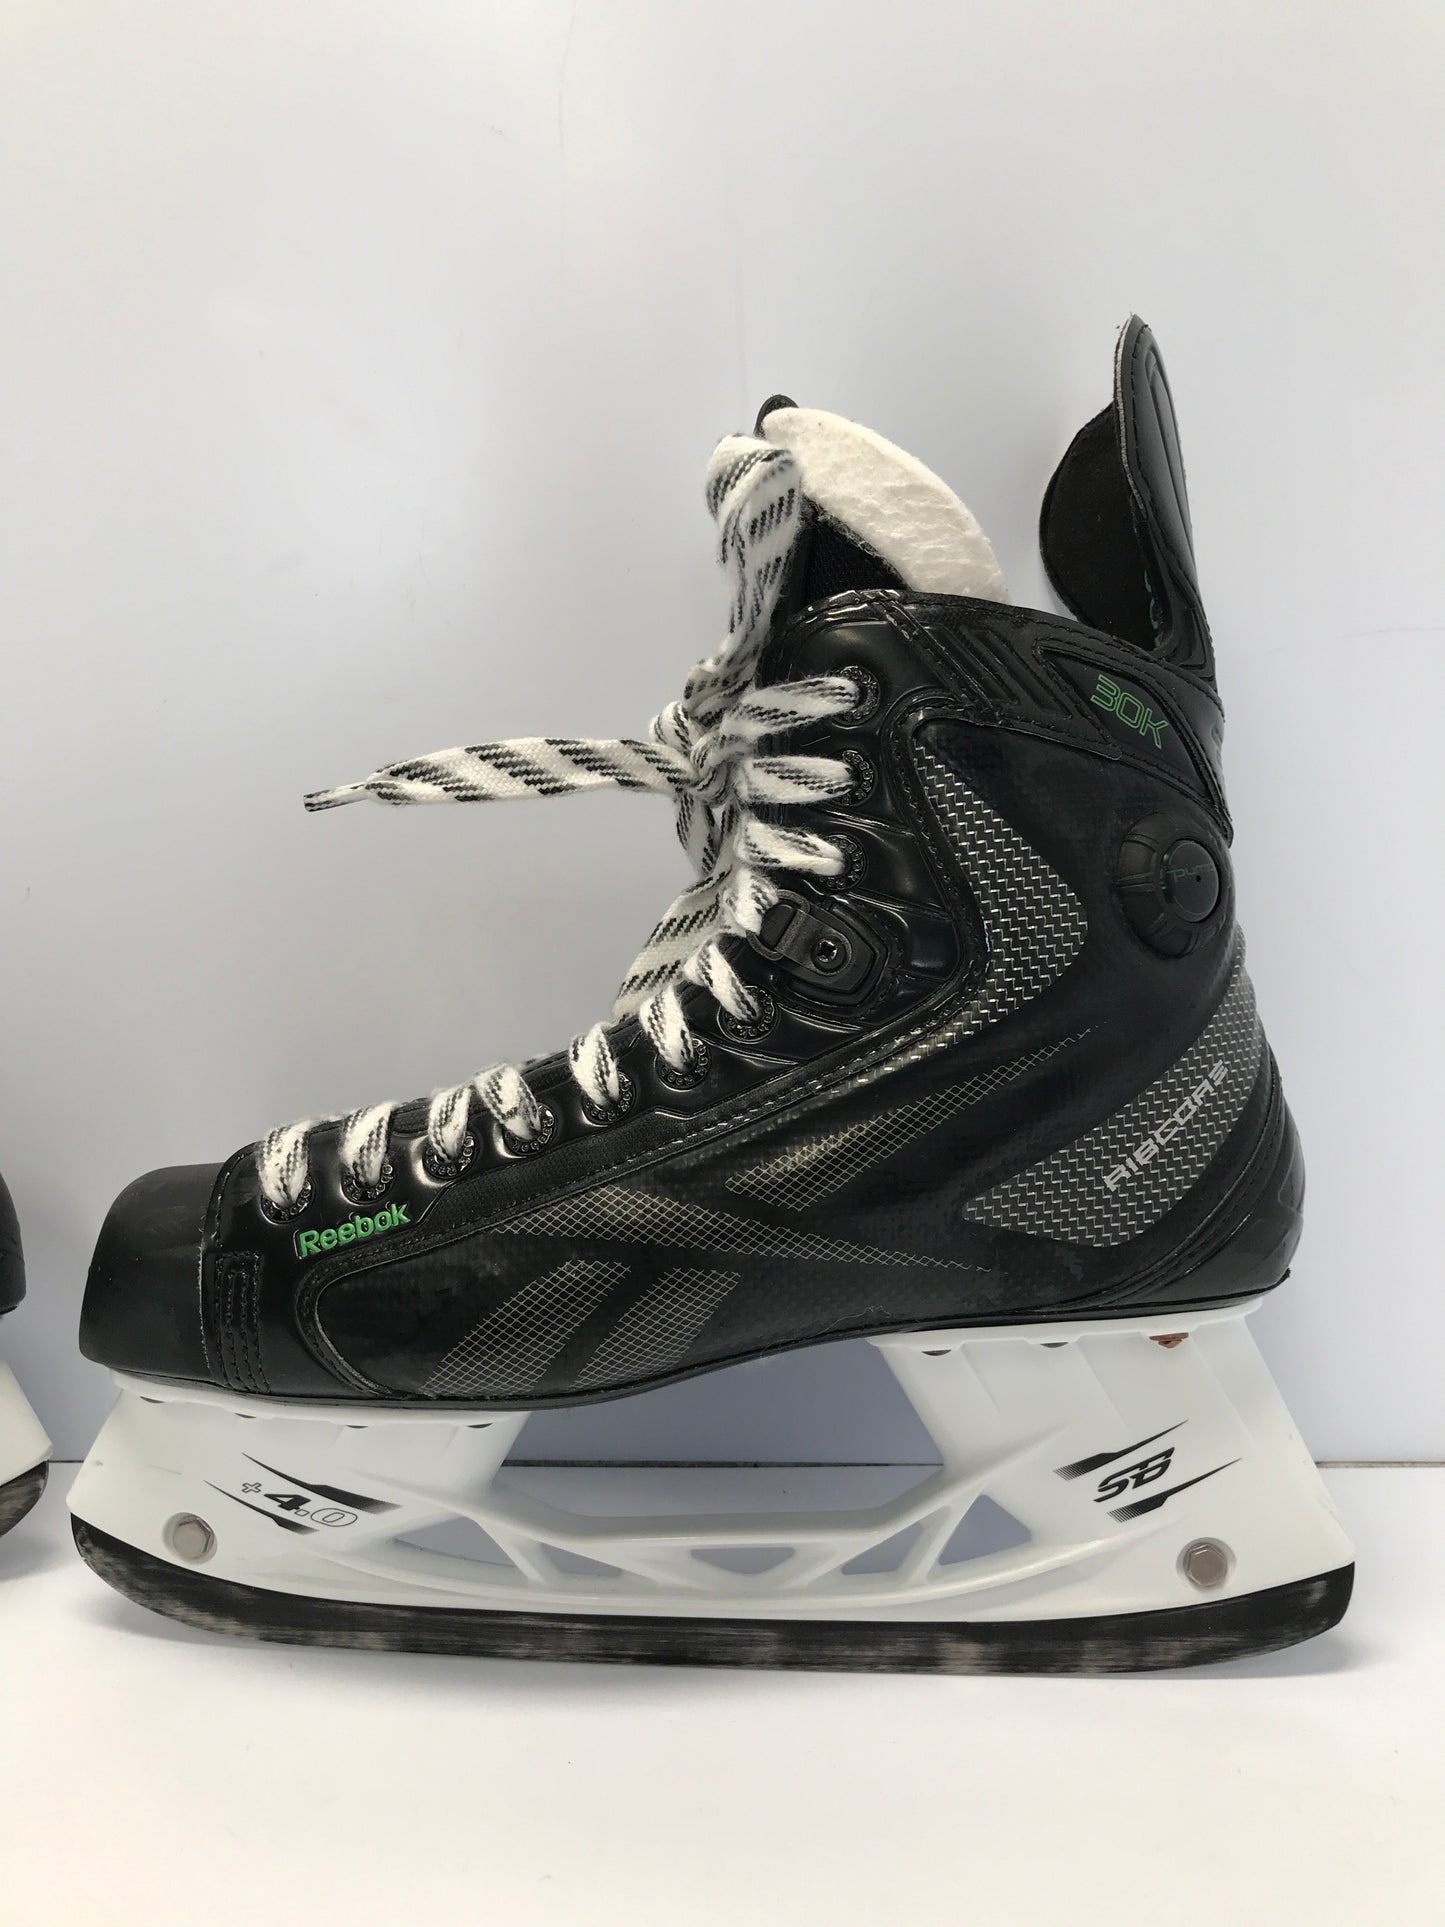 Hockey Skates Men's Senior Size 10 Shoe Size Skate Size 8.5 Reebok Like New